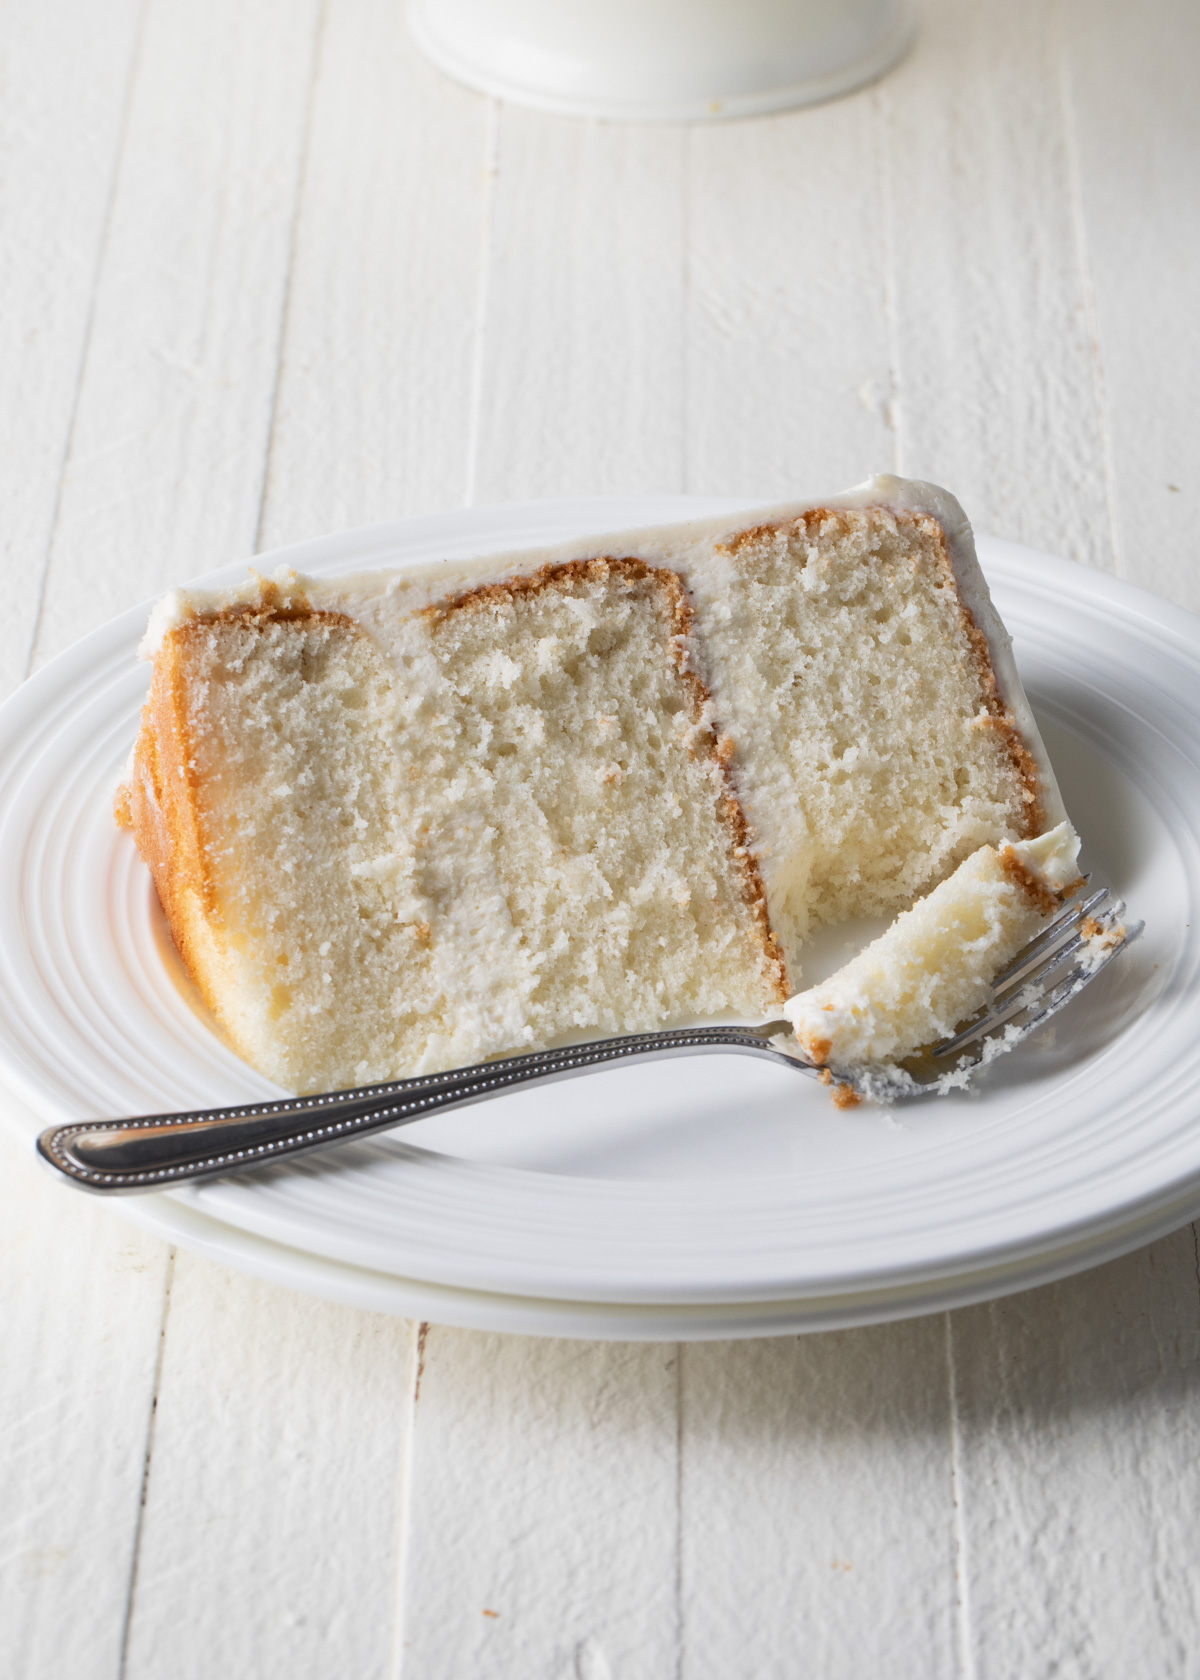 The tight, soft crumb on a slice of white velvet cake